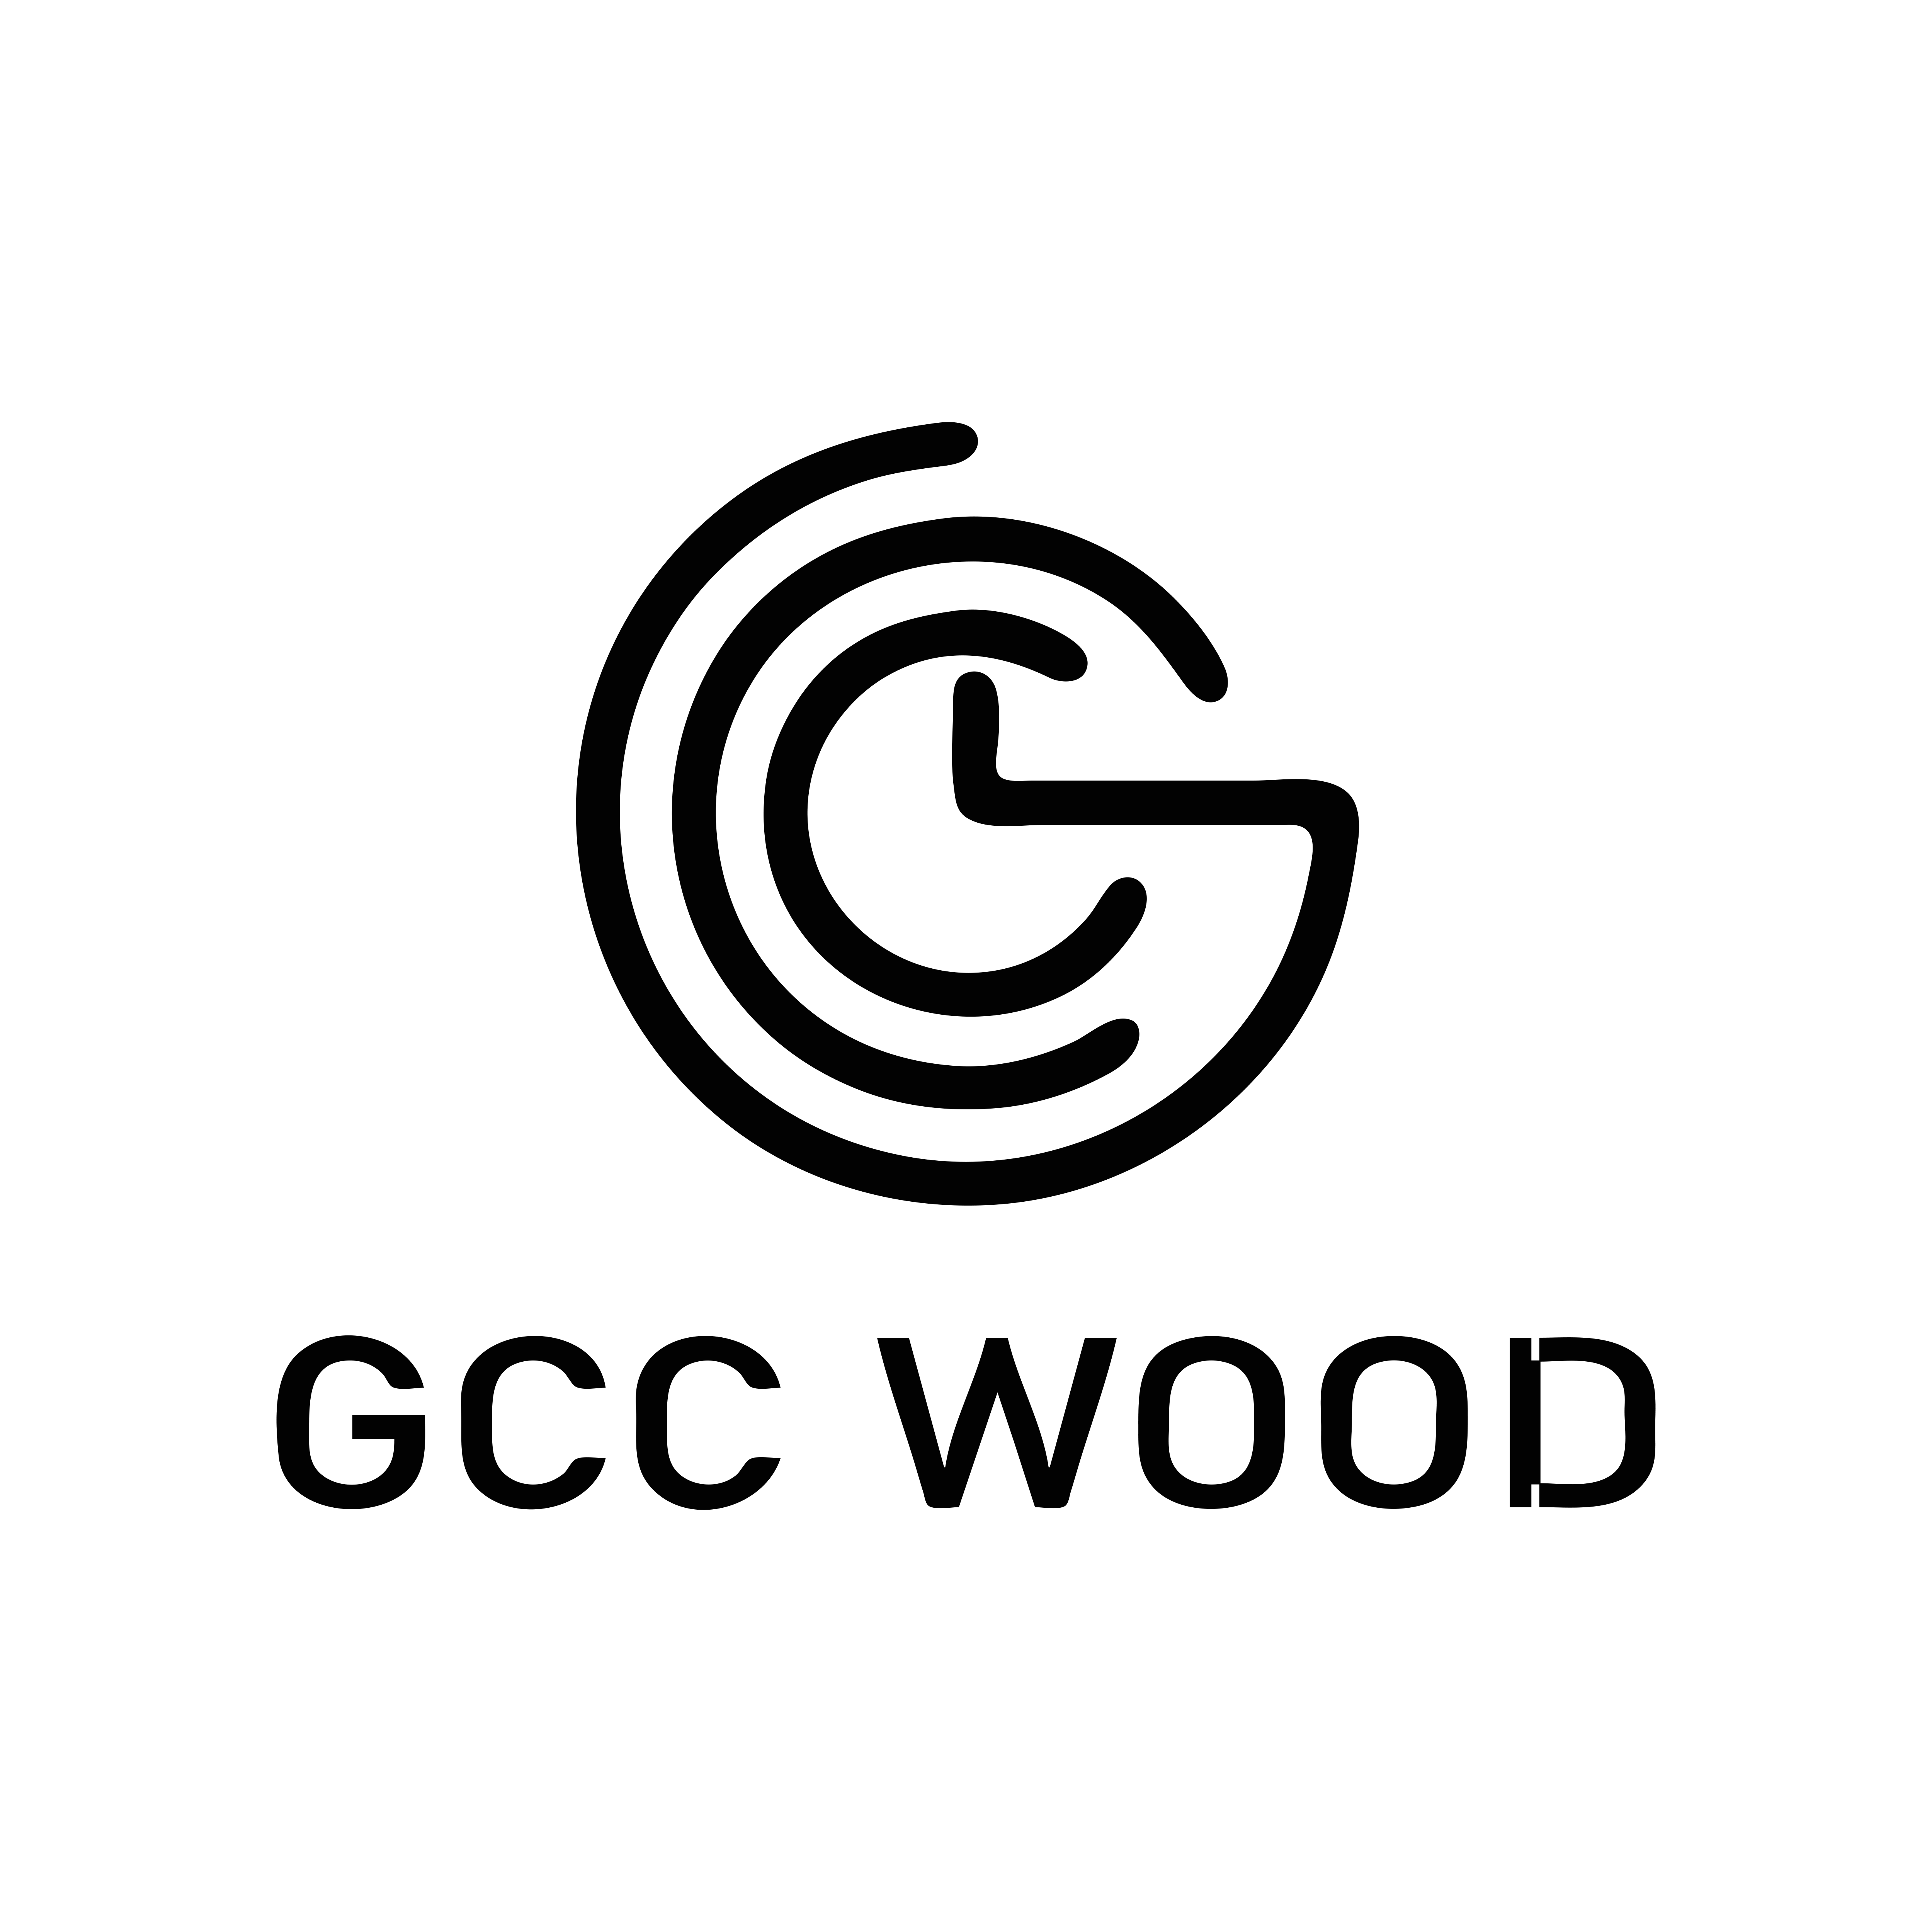 GCC WOOD